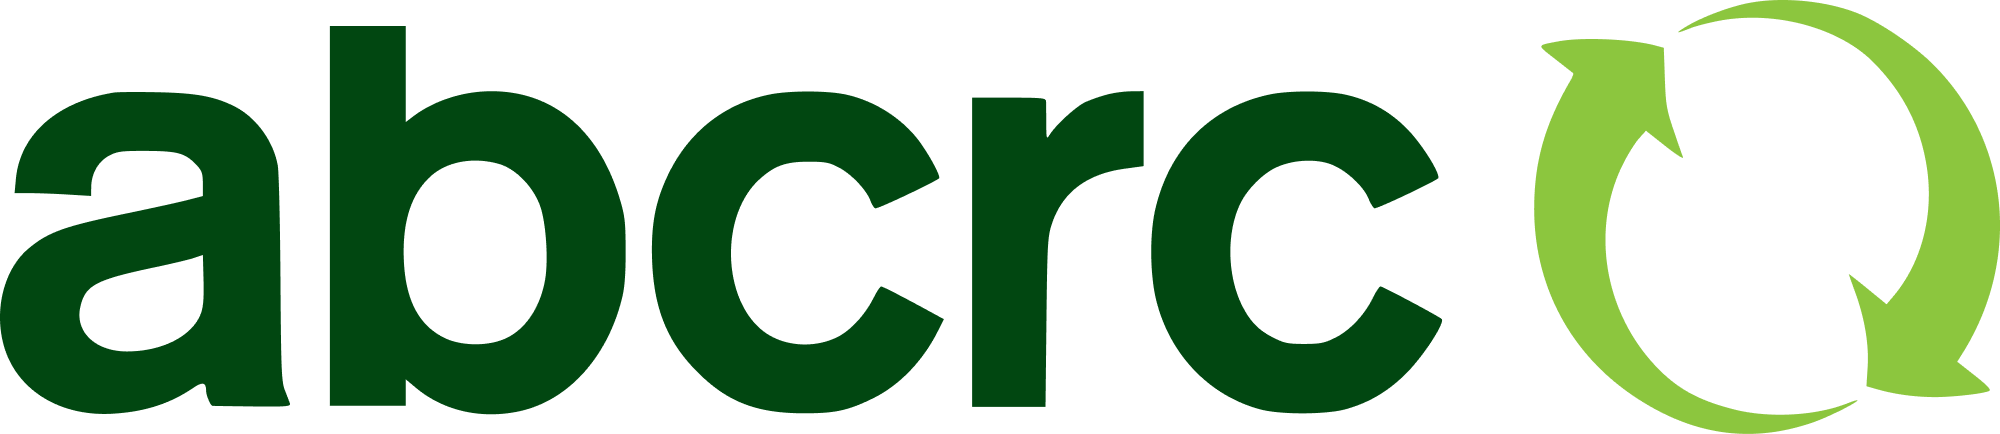 ABCRC logo on transparent background